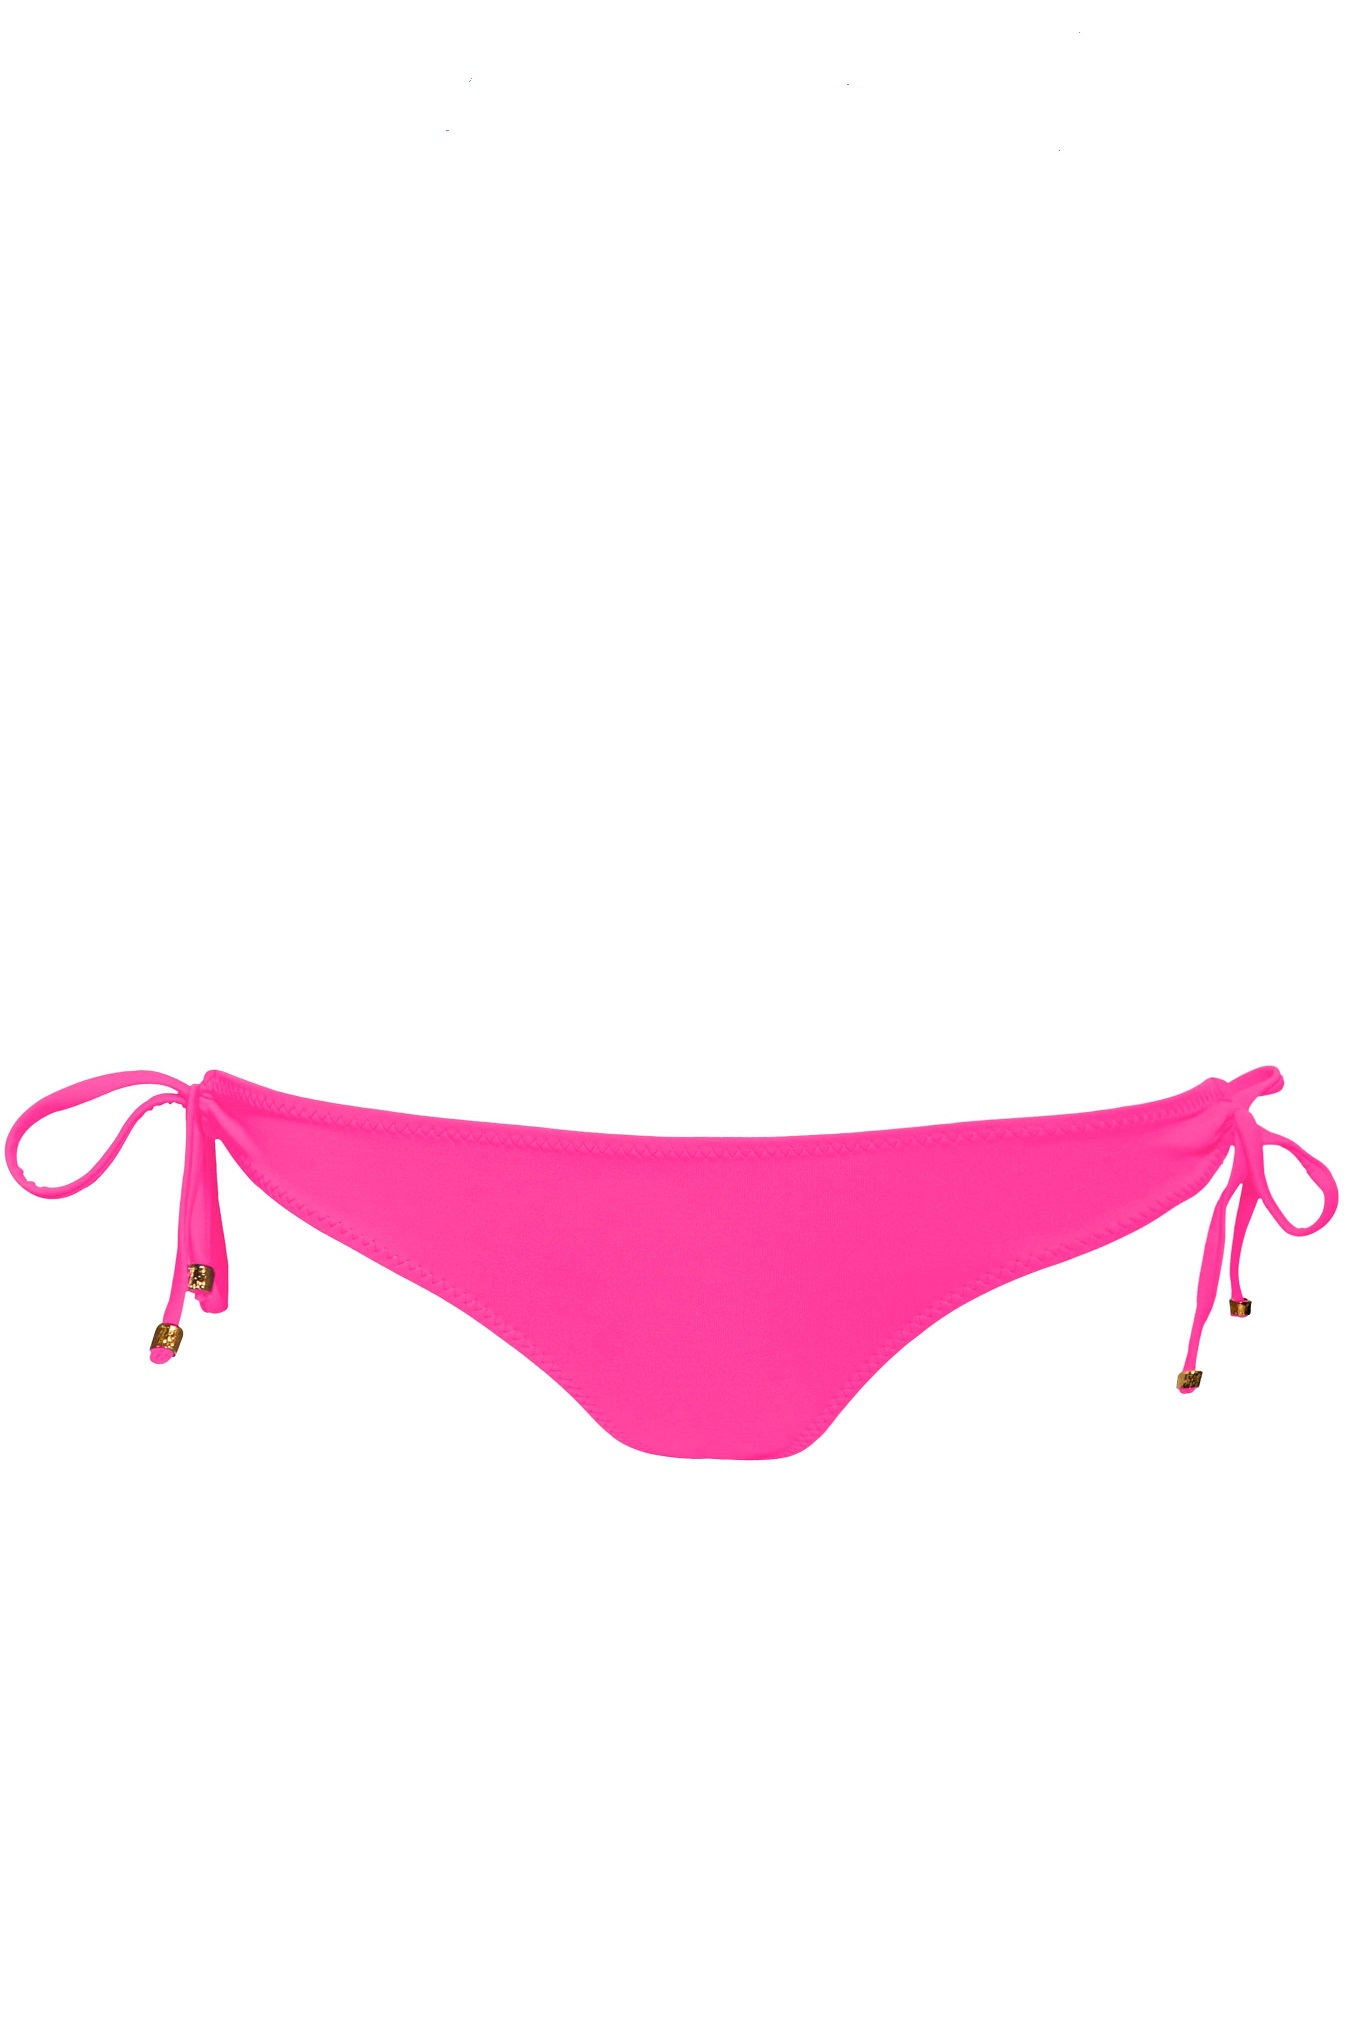 Phax Color Mix Latin Bikini Bottom Neon Pink-extralarge-Neon Roos